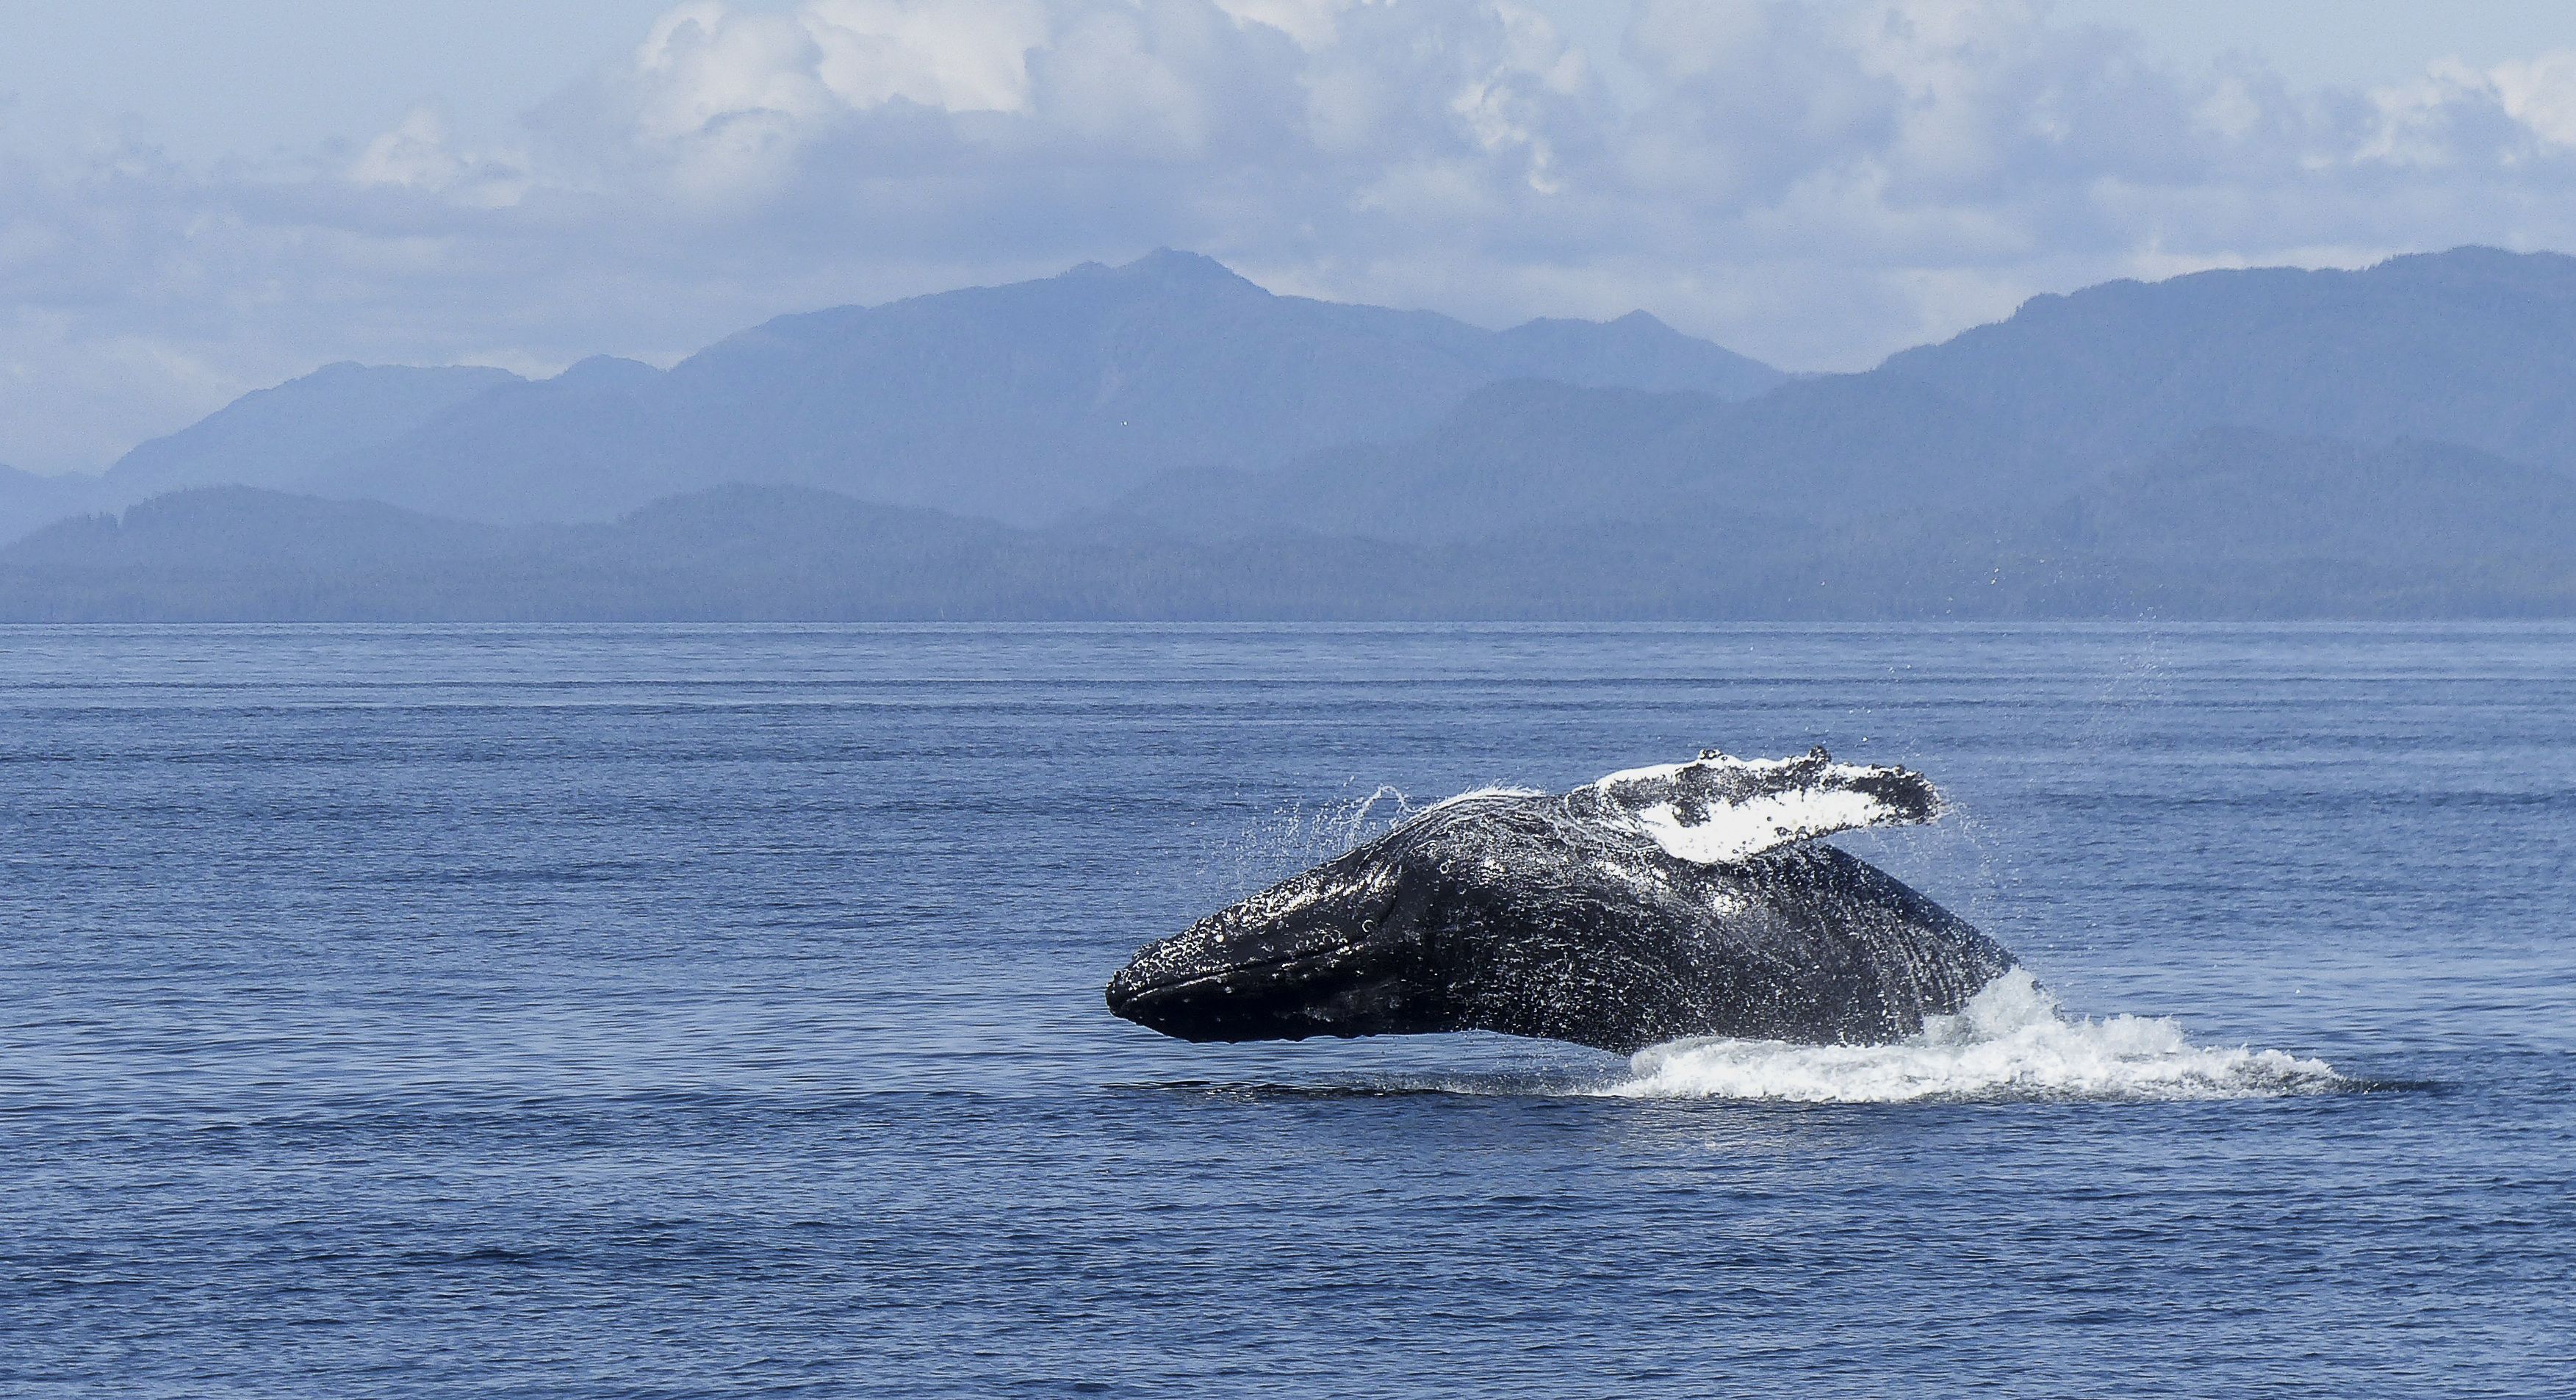 Humpback Whale. Credit Todd Cravens on Unsplash. 